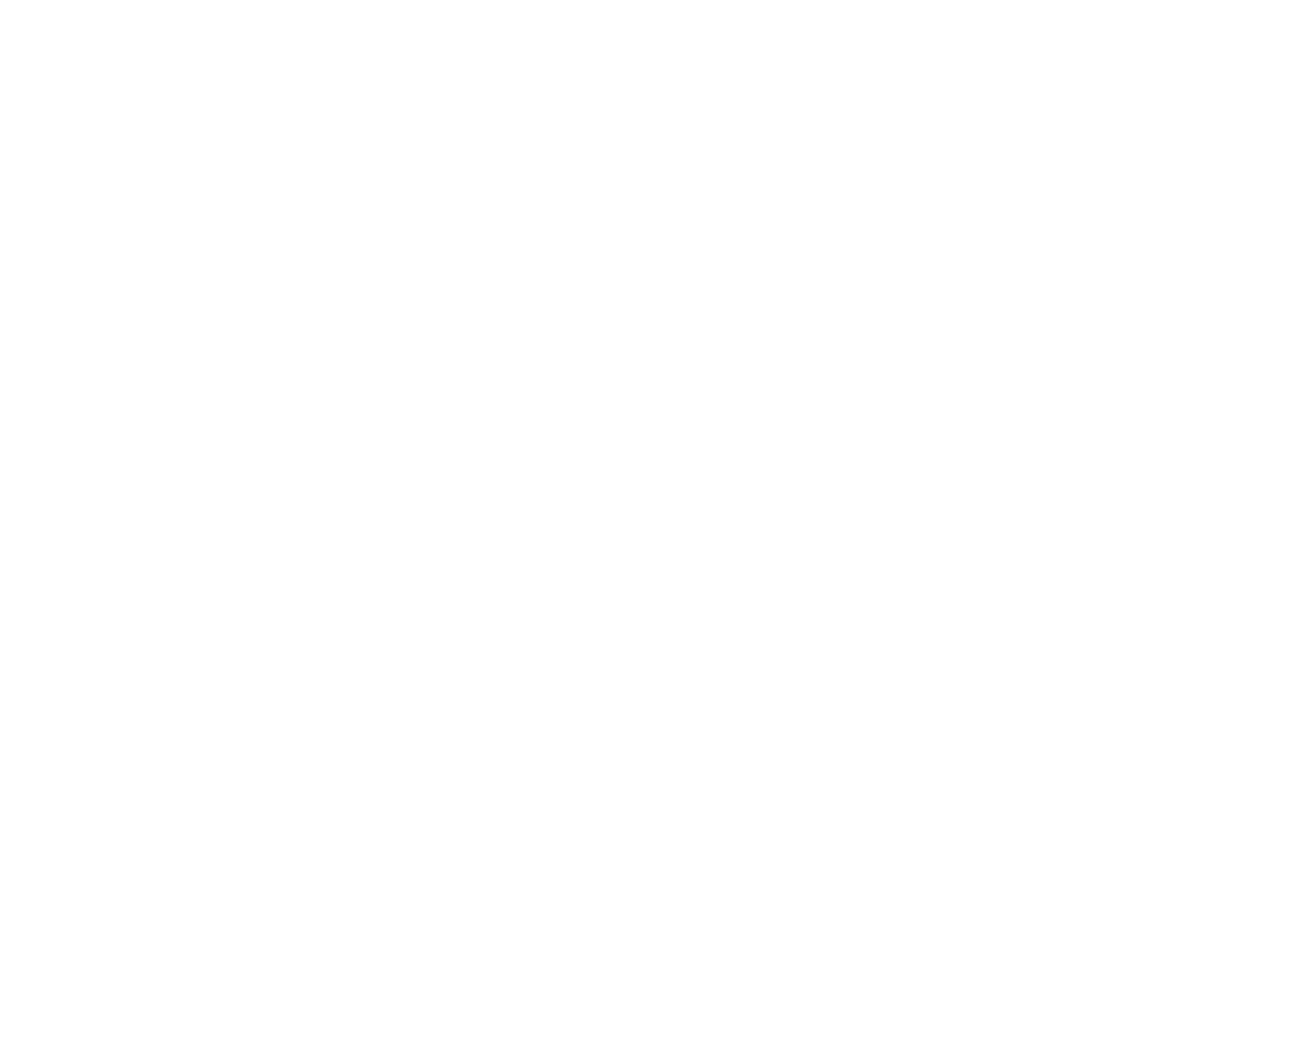 Official Mariadb Logos | Mariadb - Mariadb, Transparent background PNG HD thumbnail